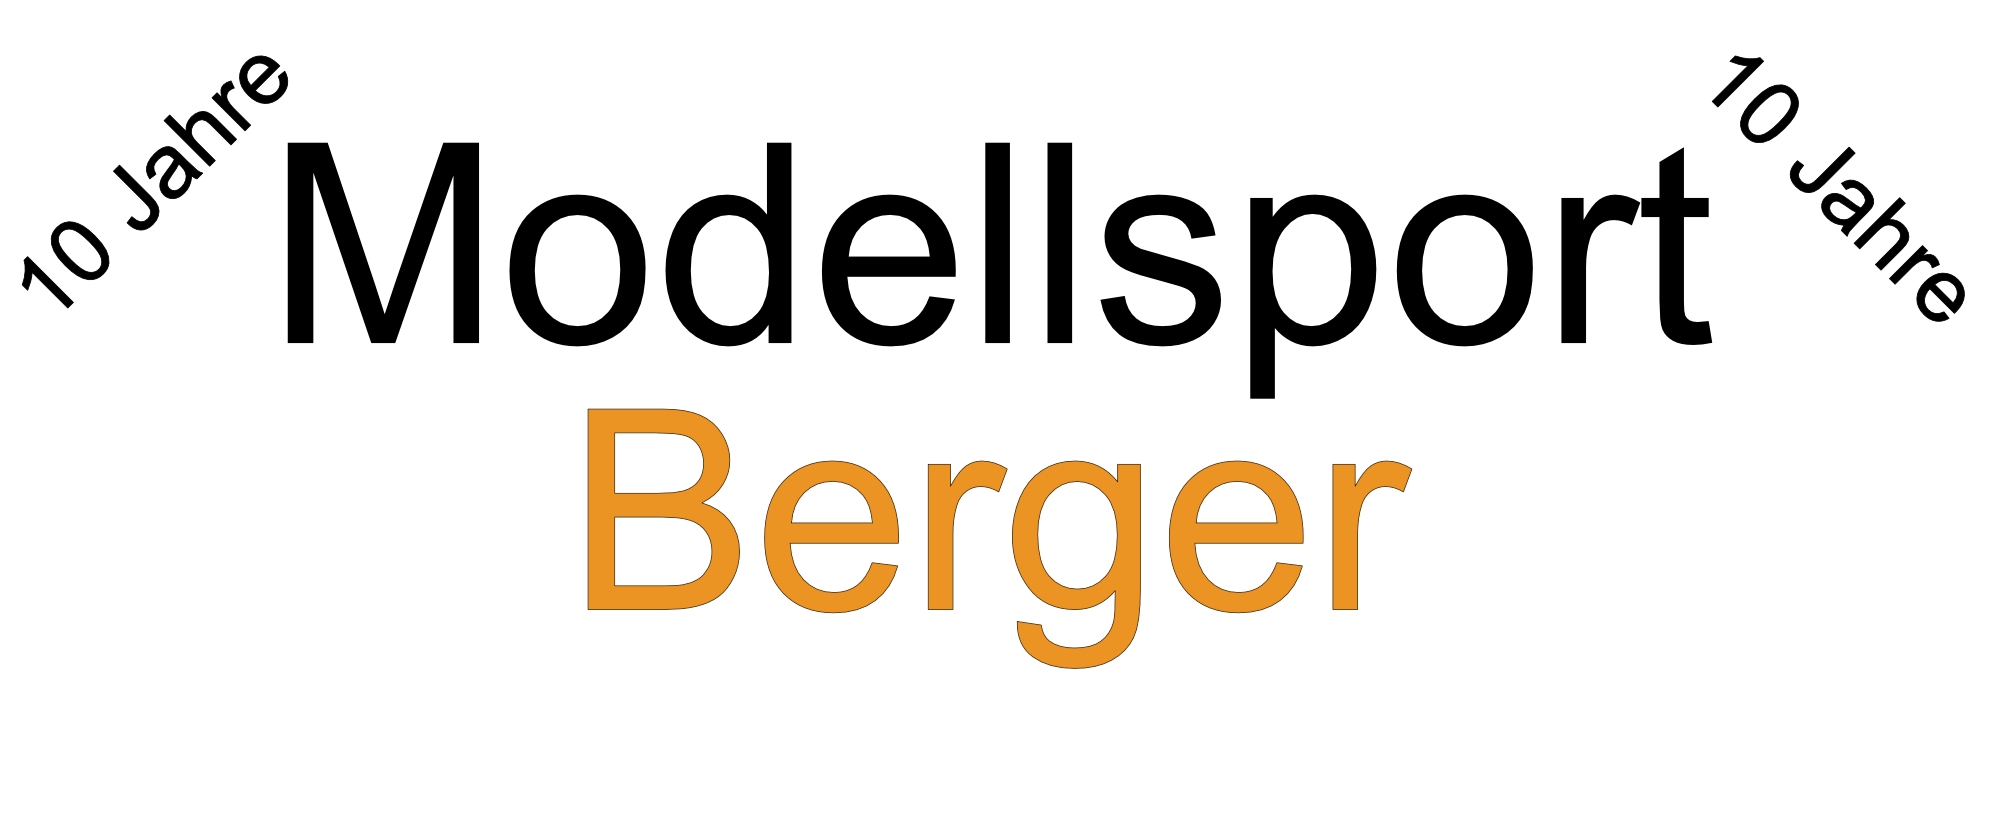 Modellsport-Berger